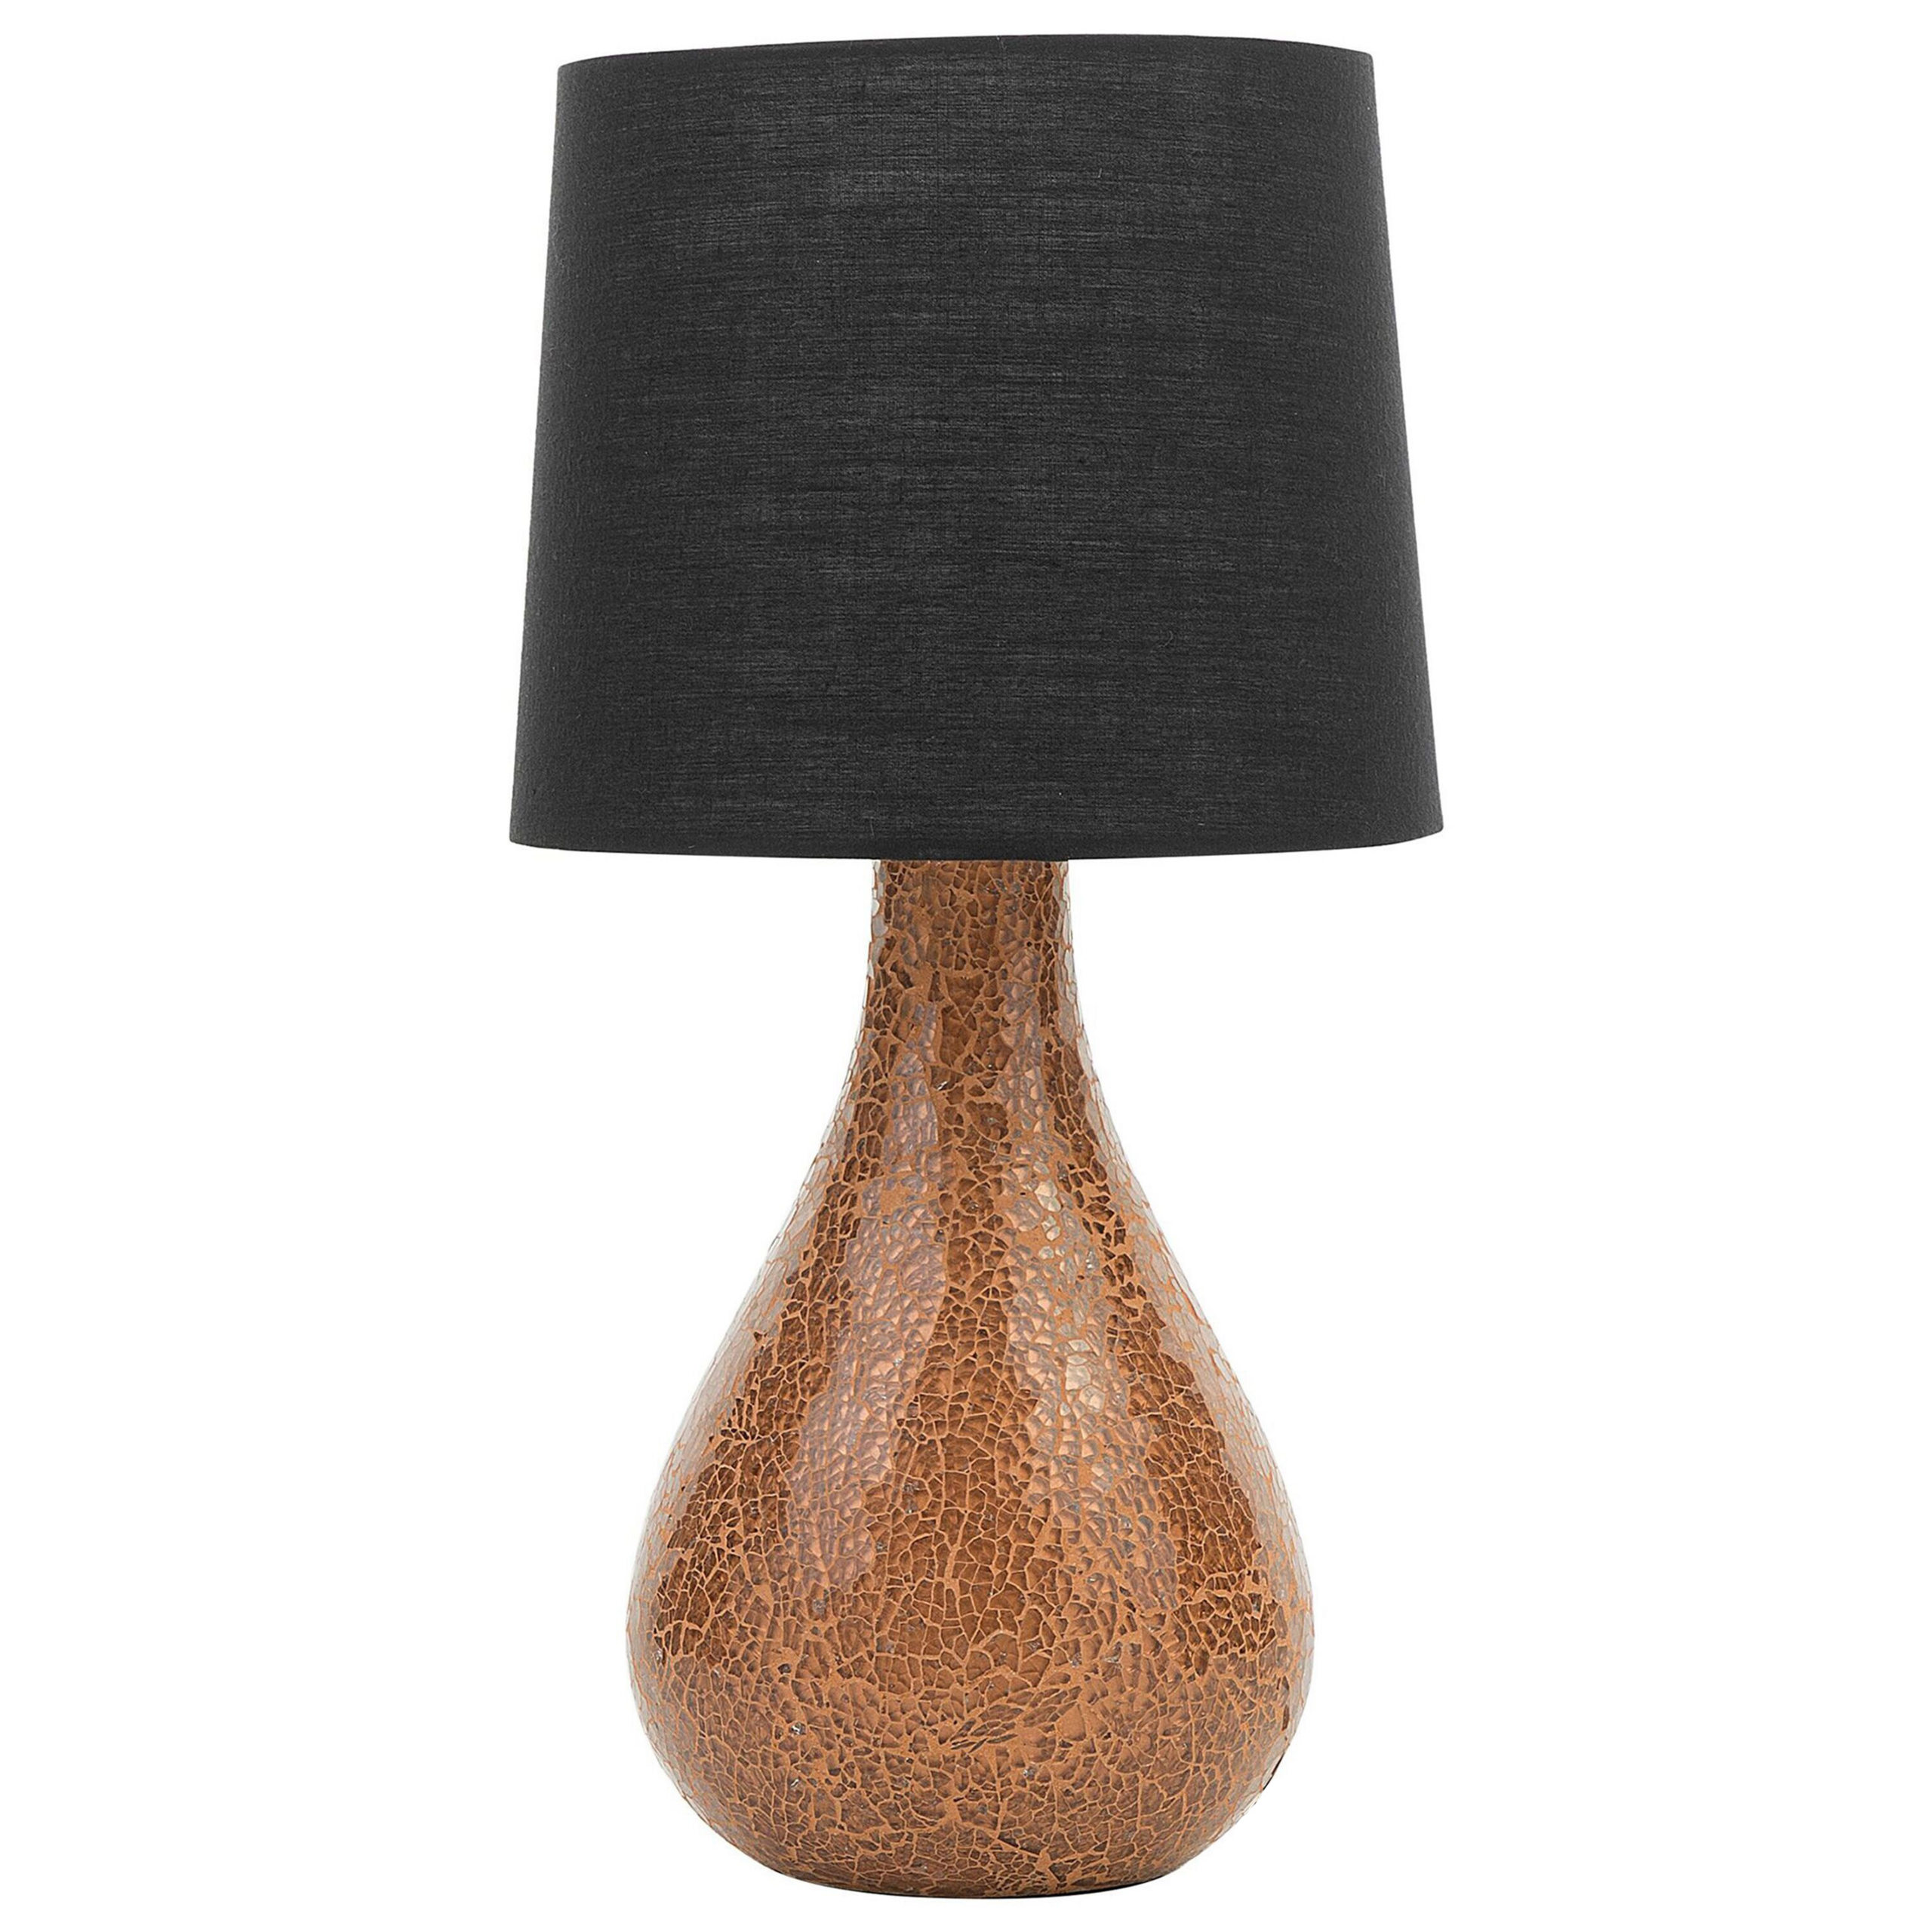 Beliani Table Lamp Copper Glass Base Black Drum Shade Bedside Light Modern Design